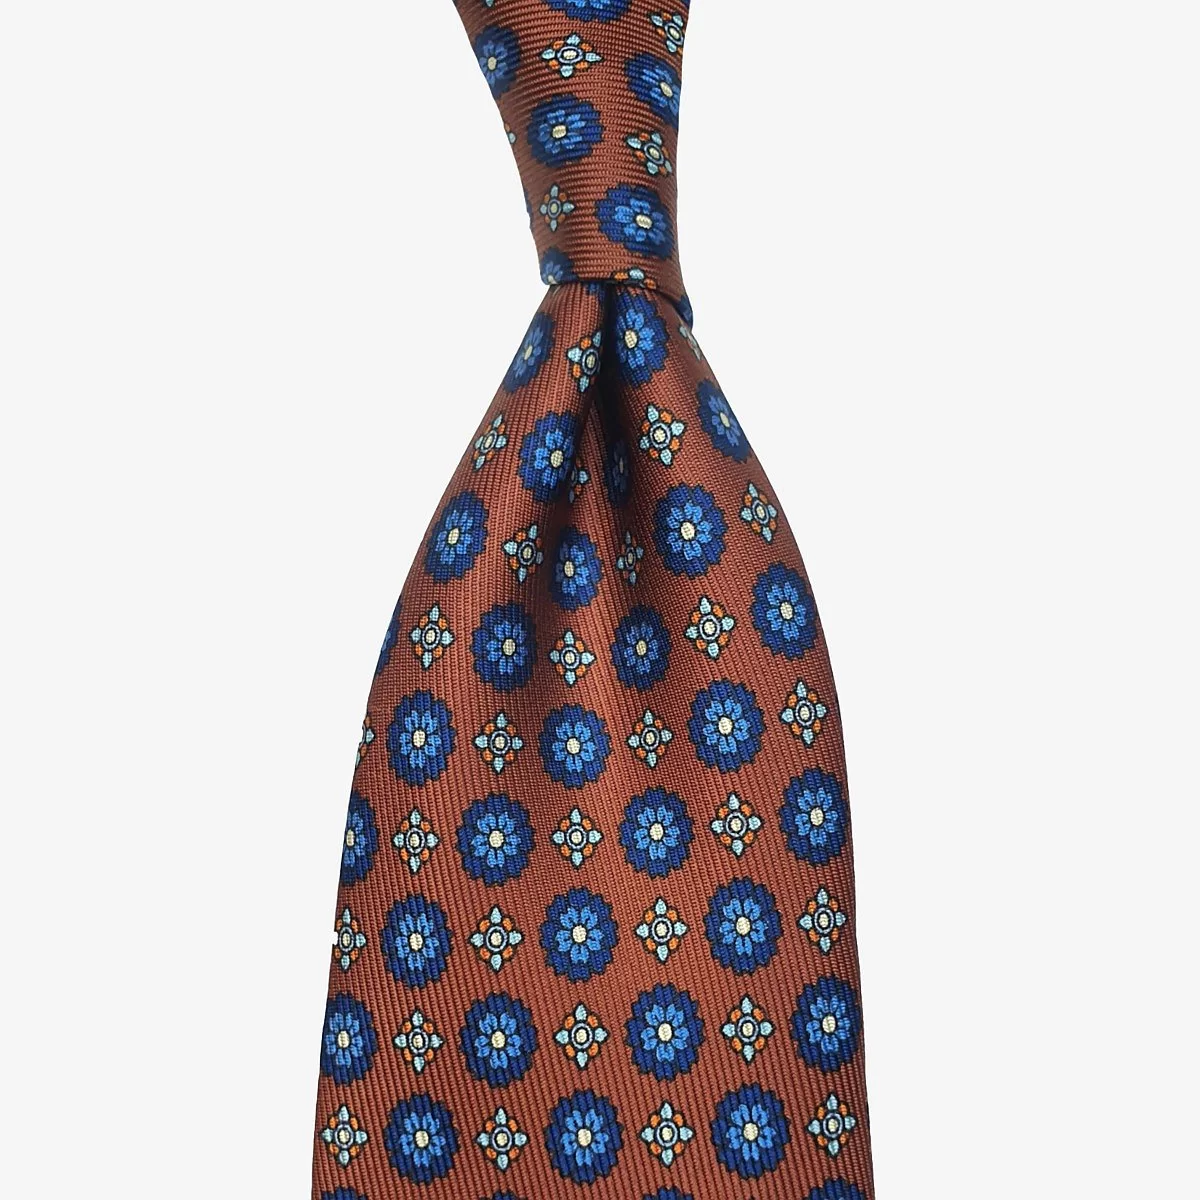 Shibumi Firenze 7-fold oak brown silk tie with blue floral pattern